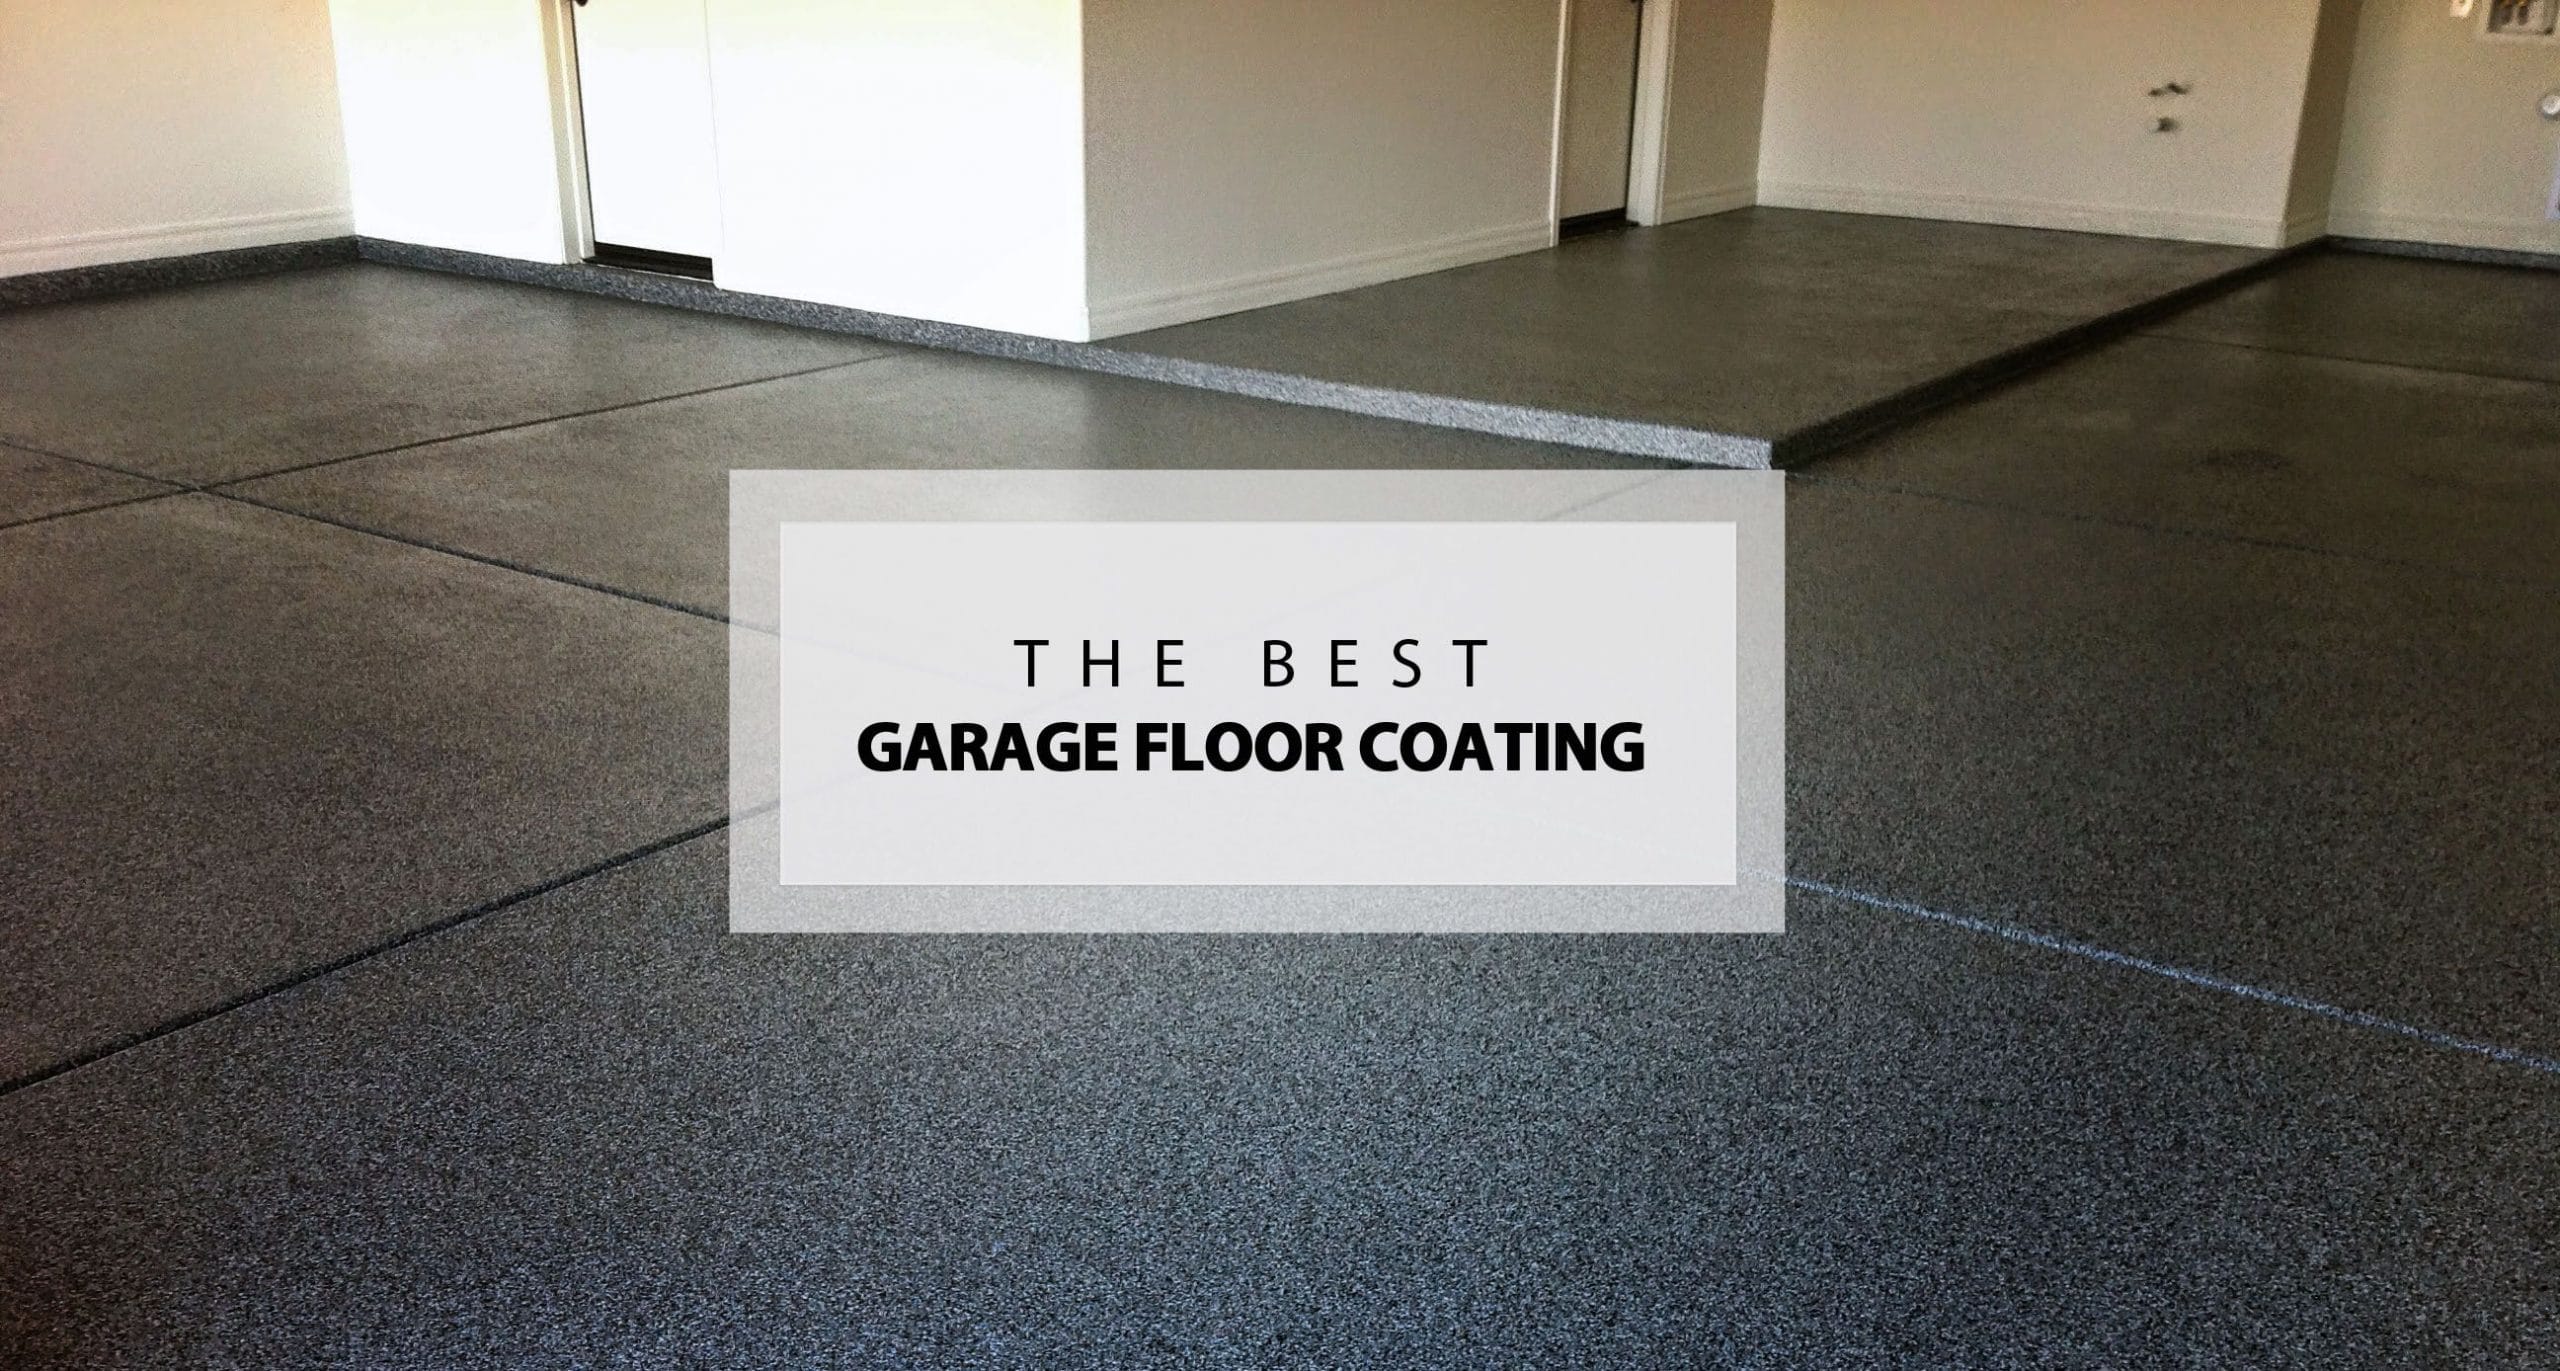 The Best Garage Floor Coating | Barefoot Surfaces